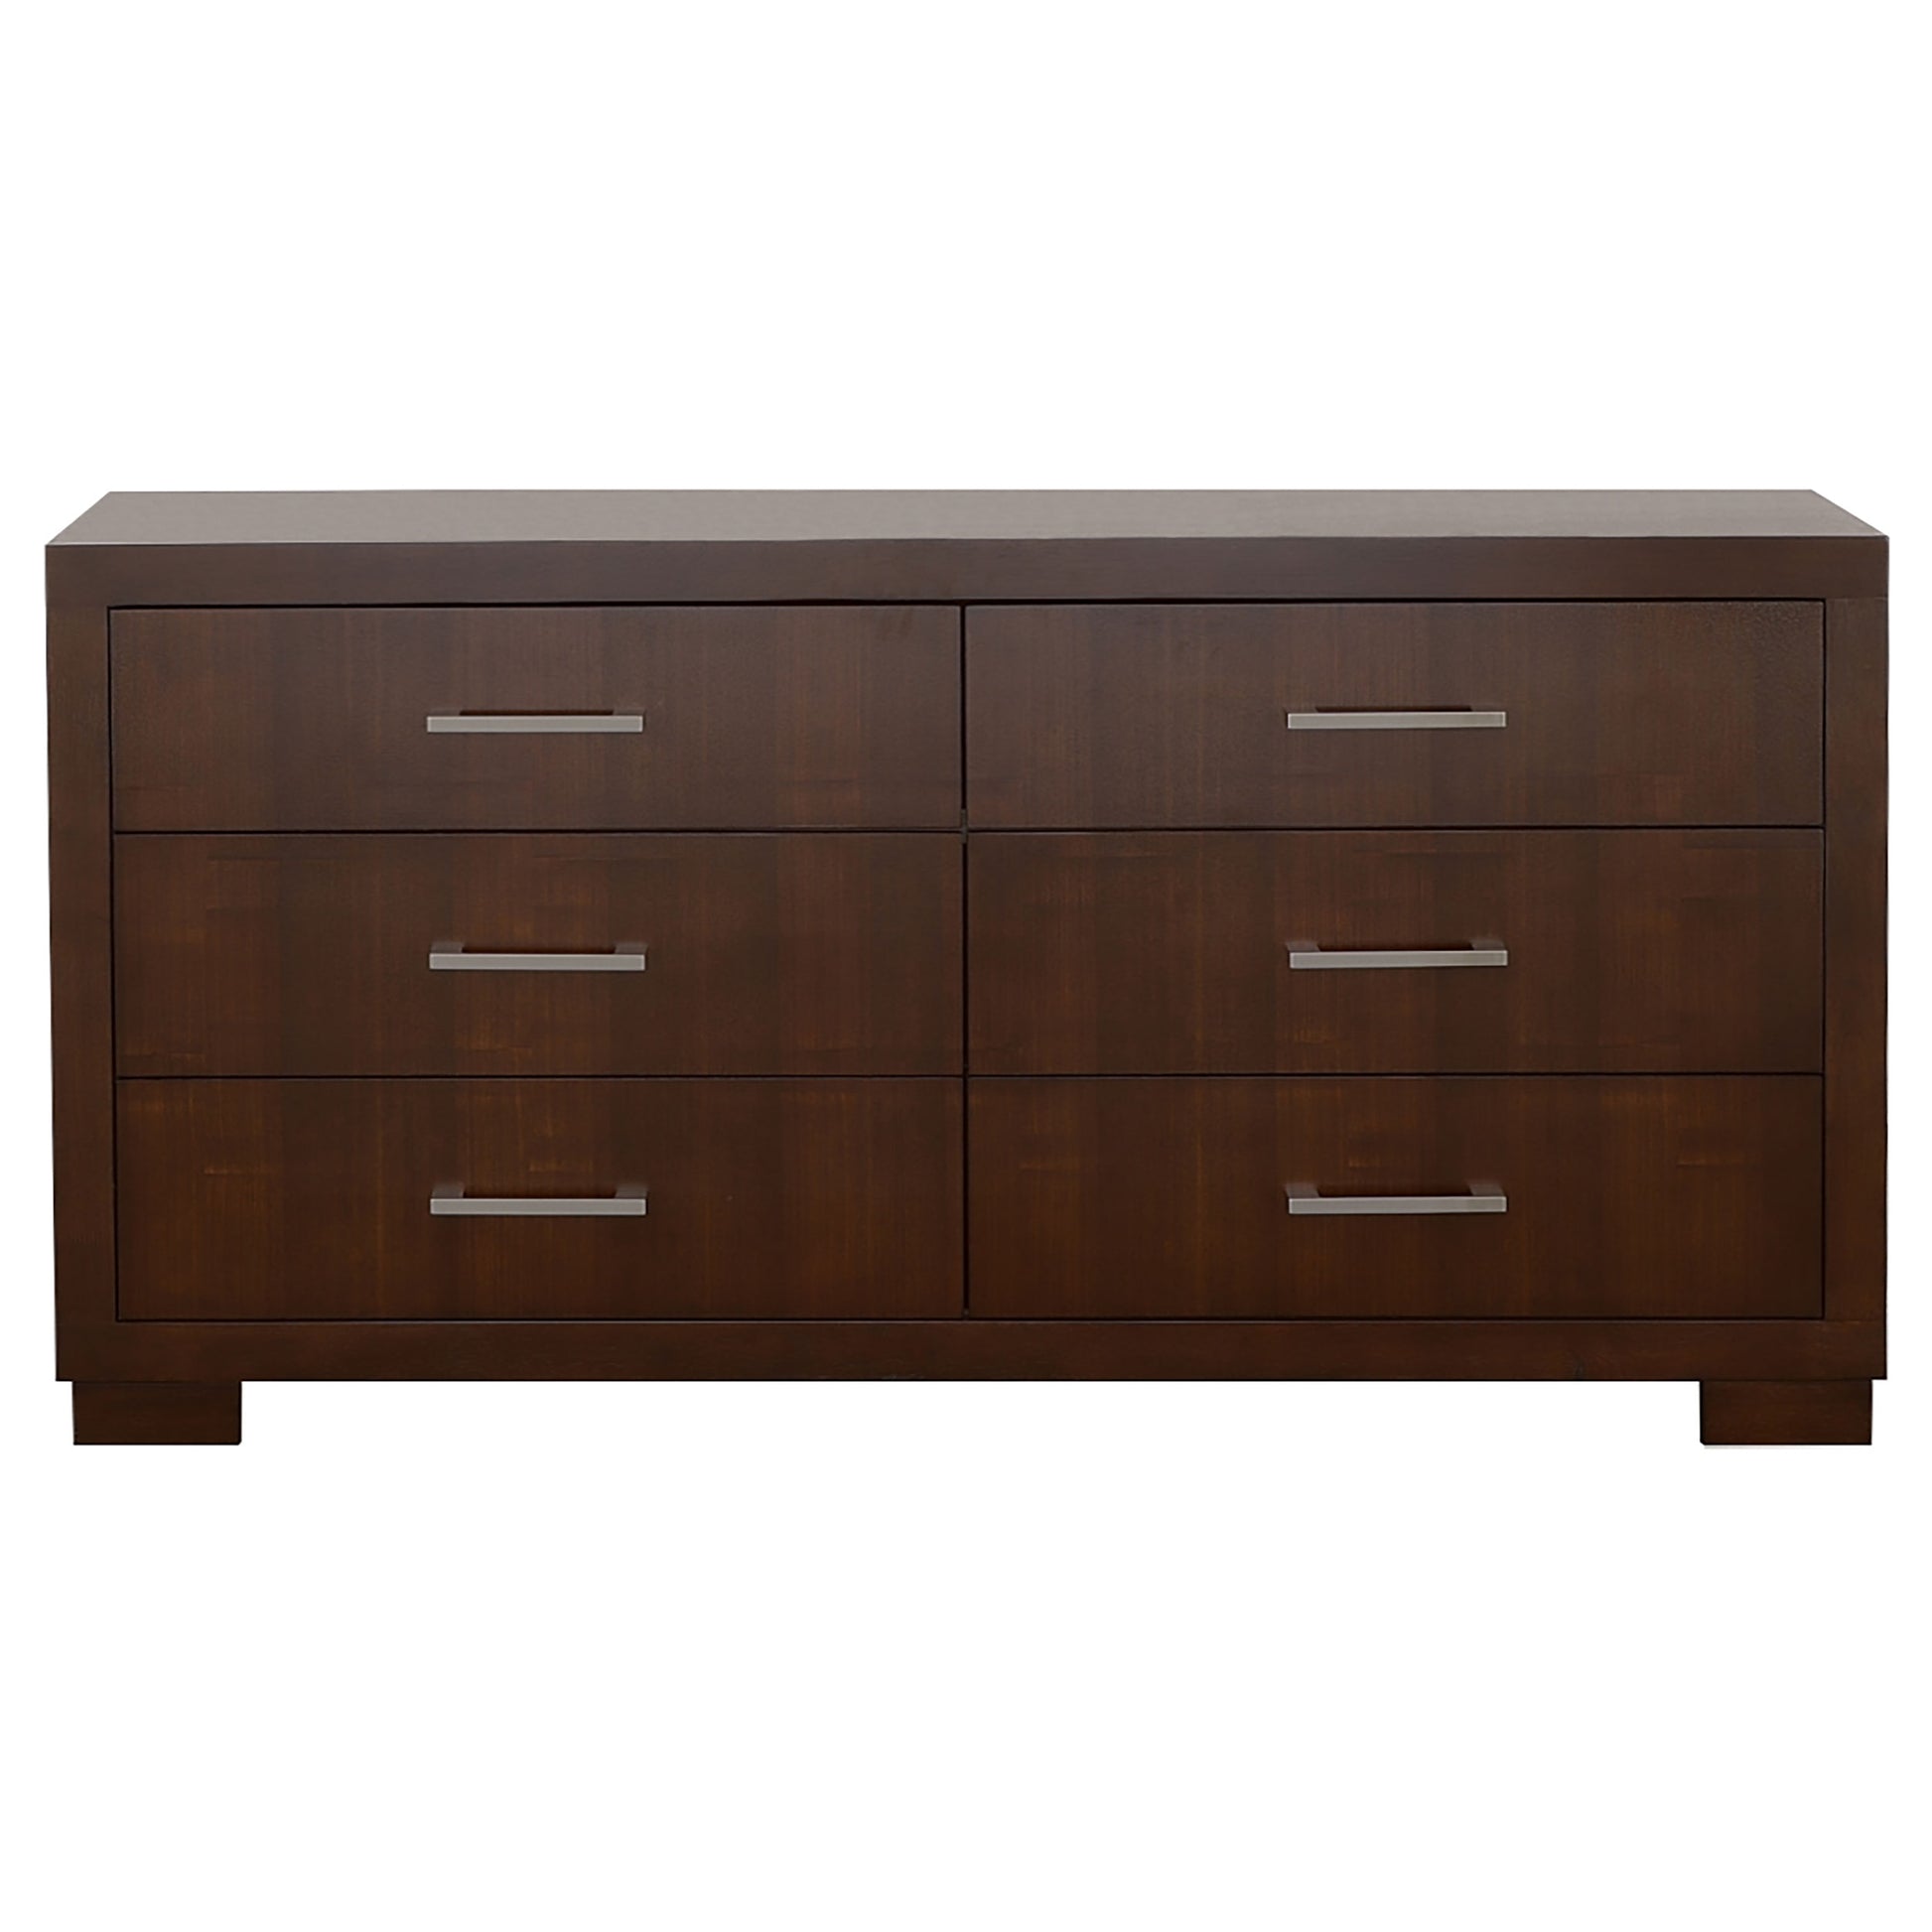 Jessica 6-drawer Dresser6 Drawer DresserCoaster FurnitureColor: Cappuccino